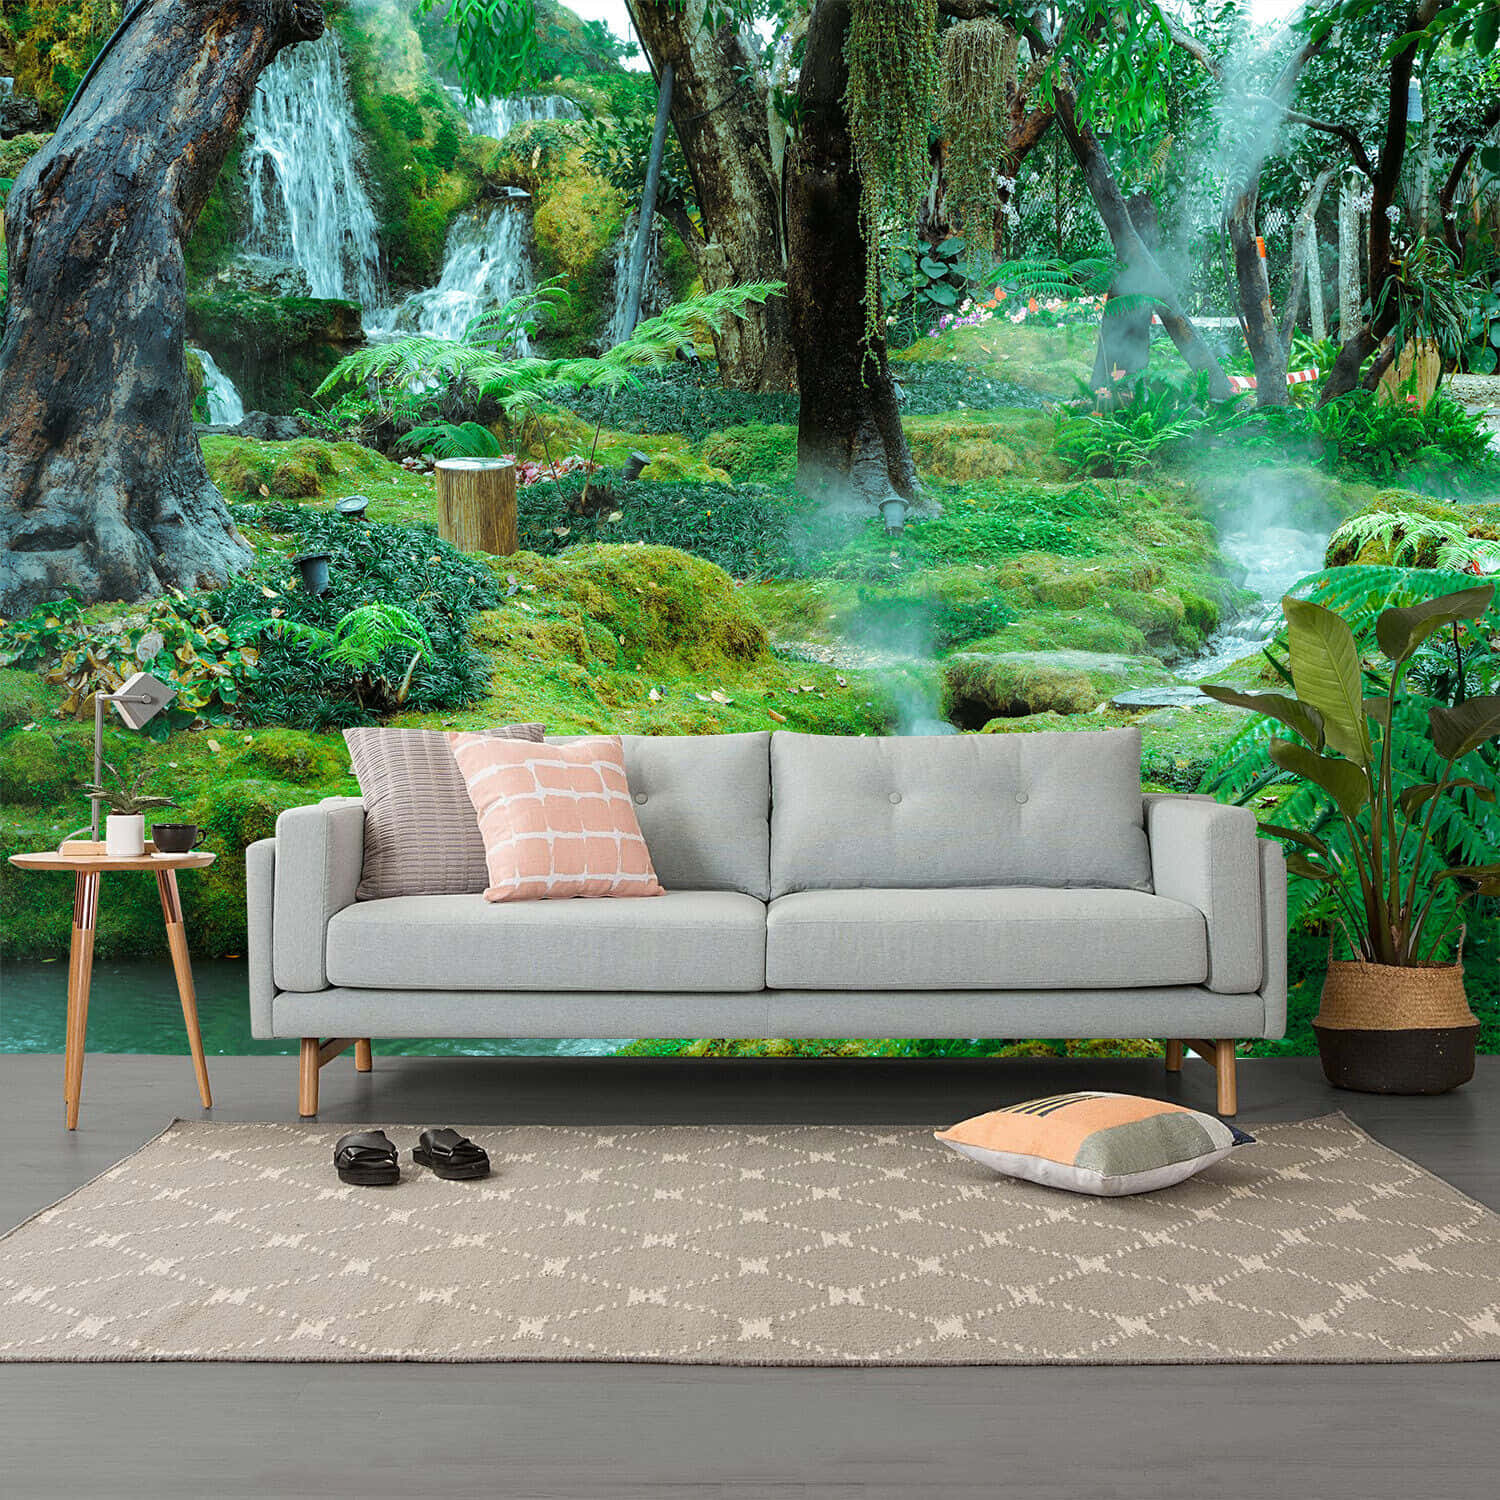 Dreamy 3D Forest Landscape Wallpaper